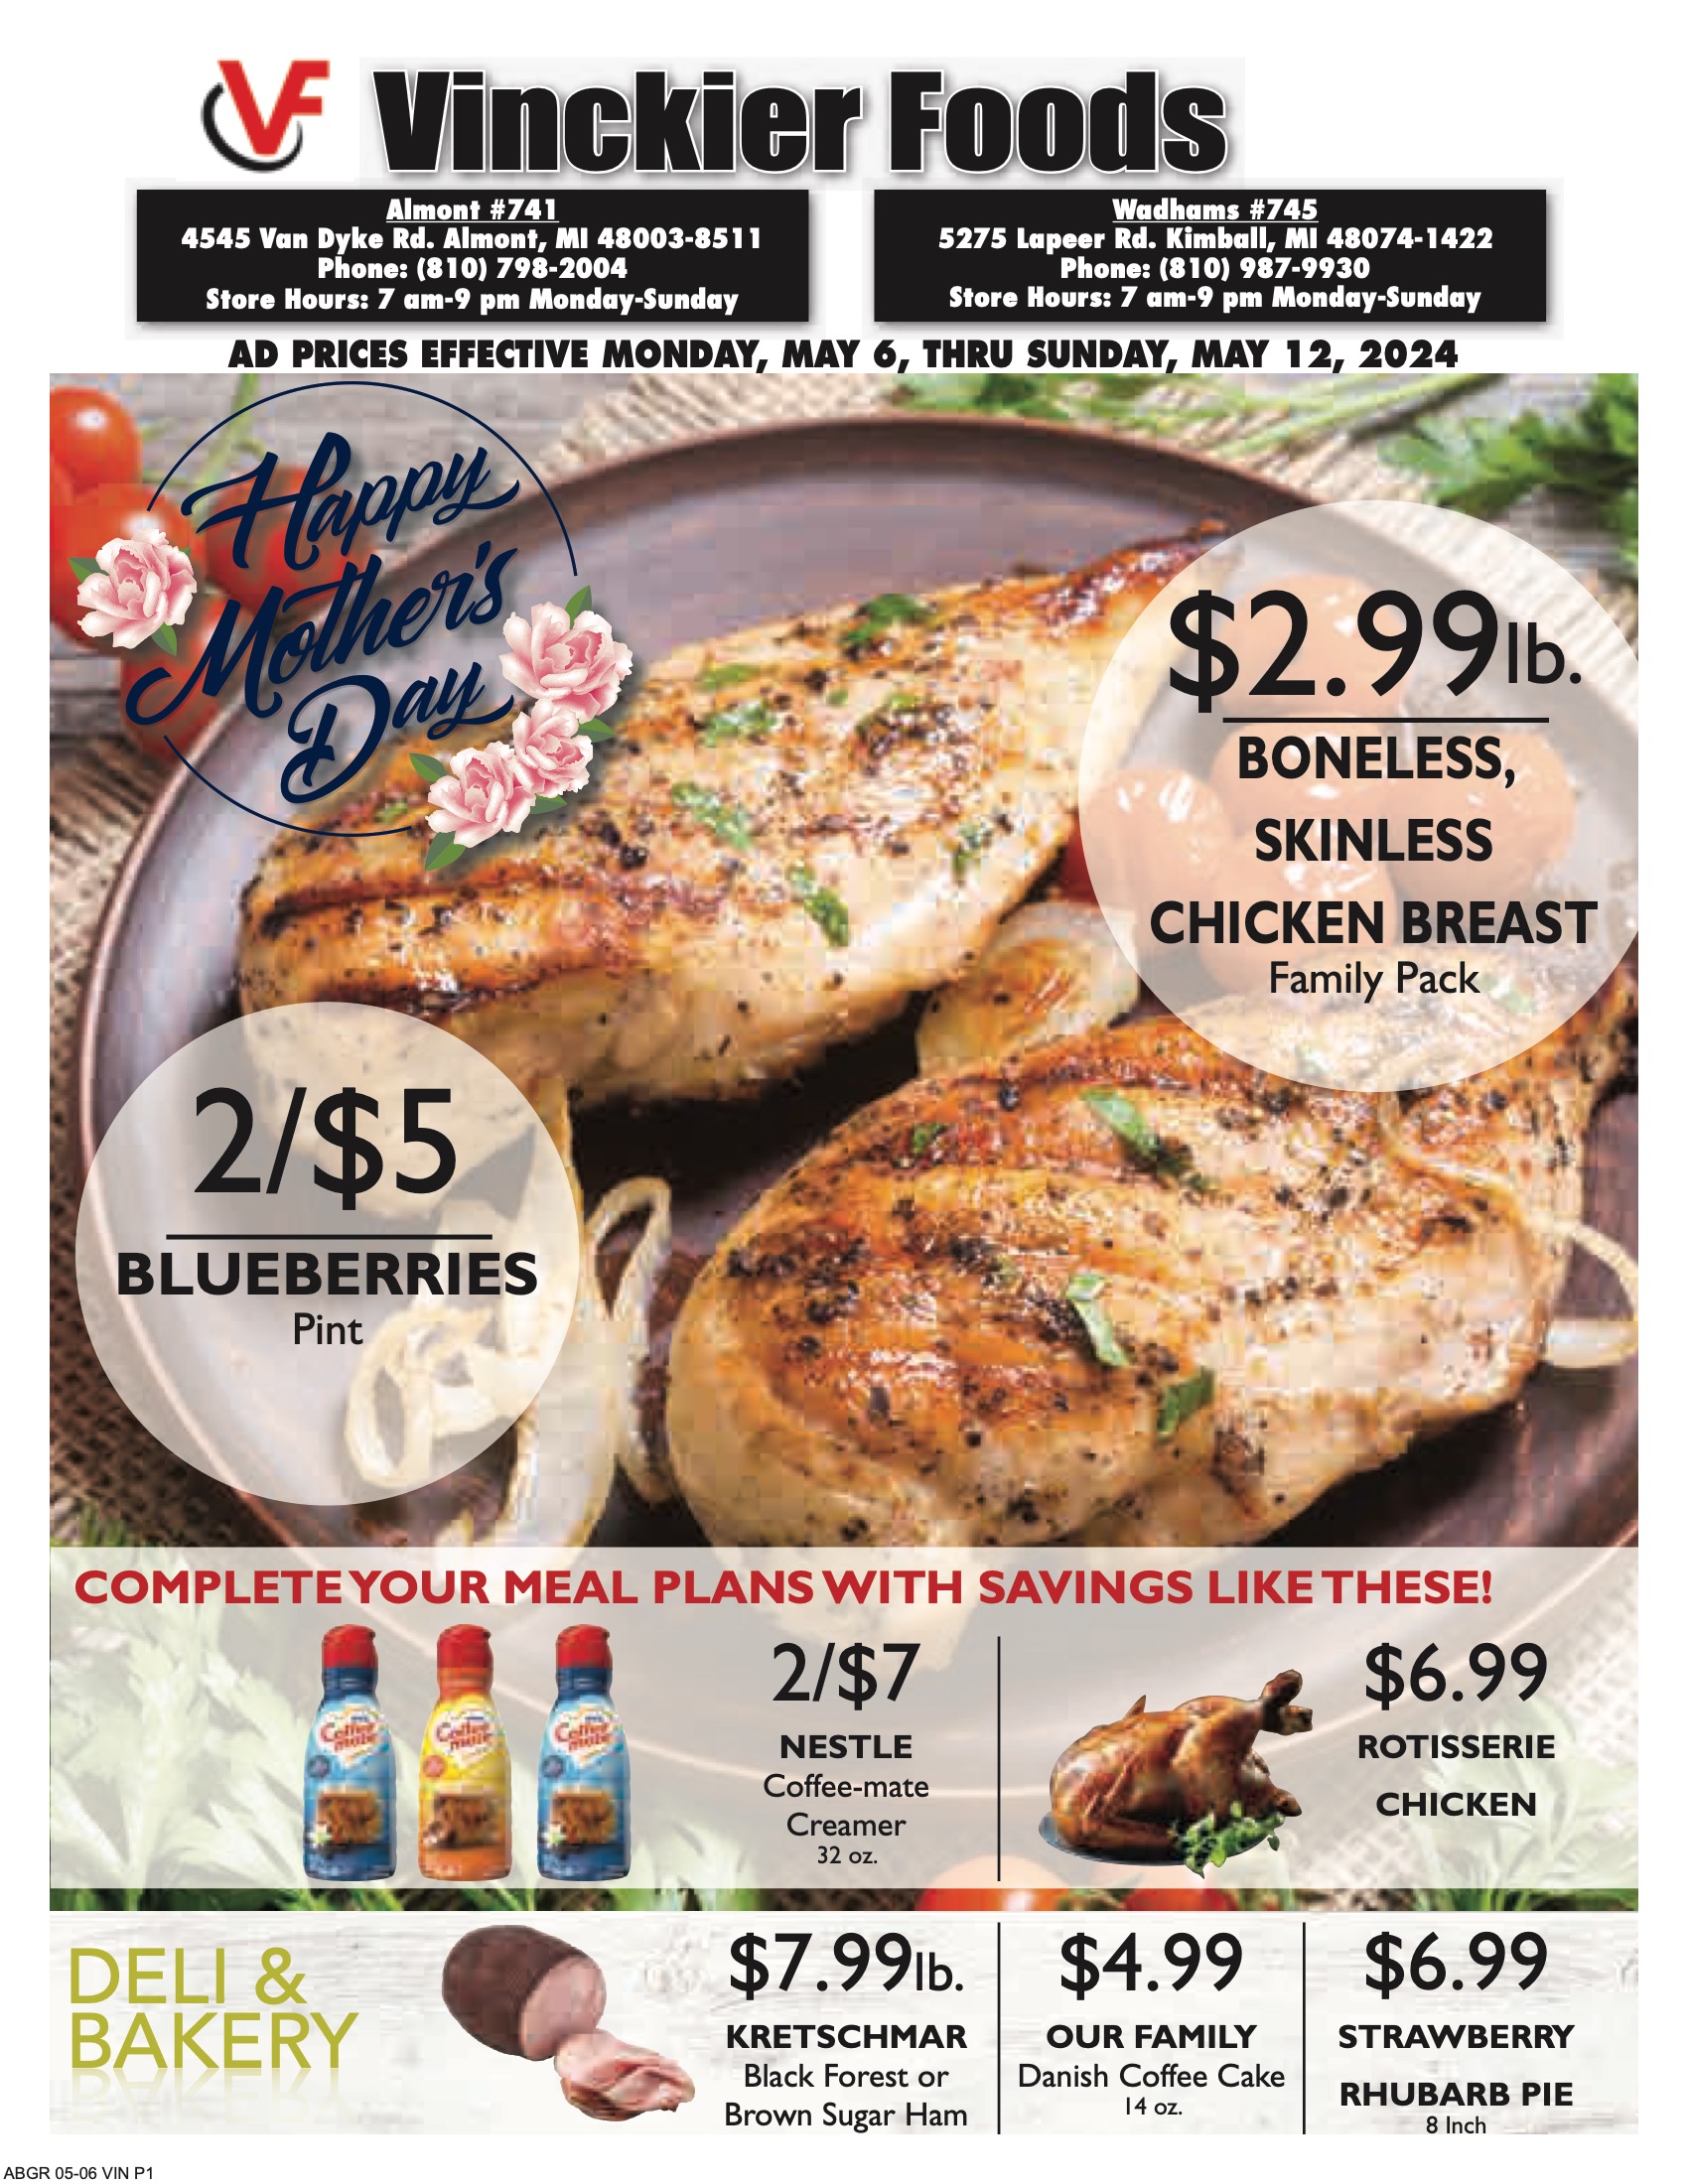 Weekly ad circular for Vinckier Foods